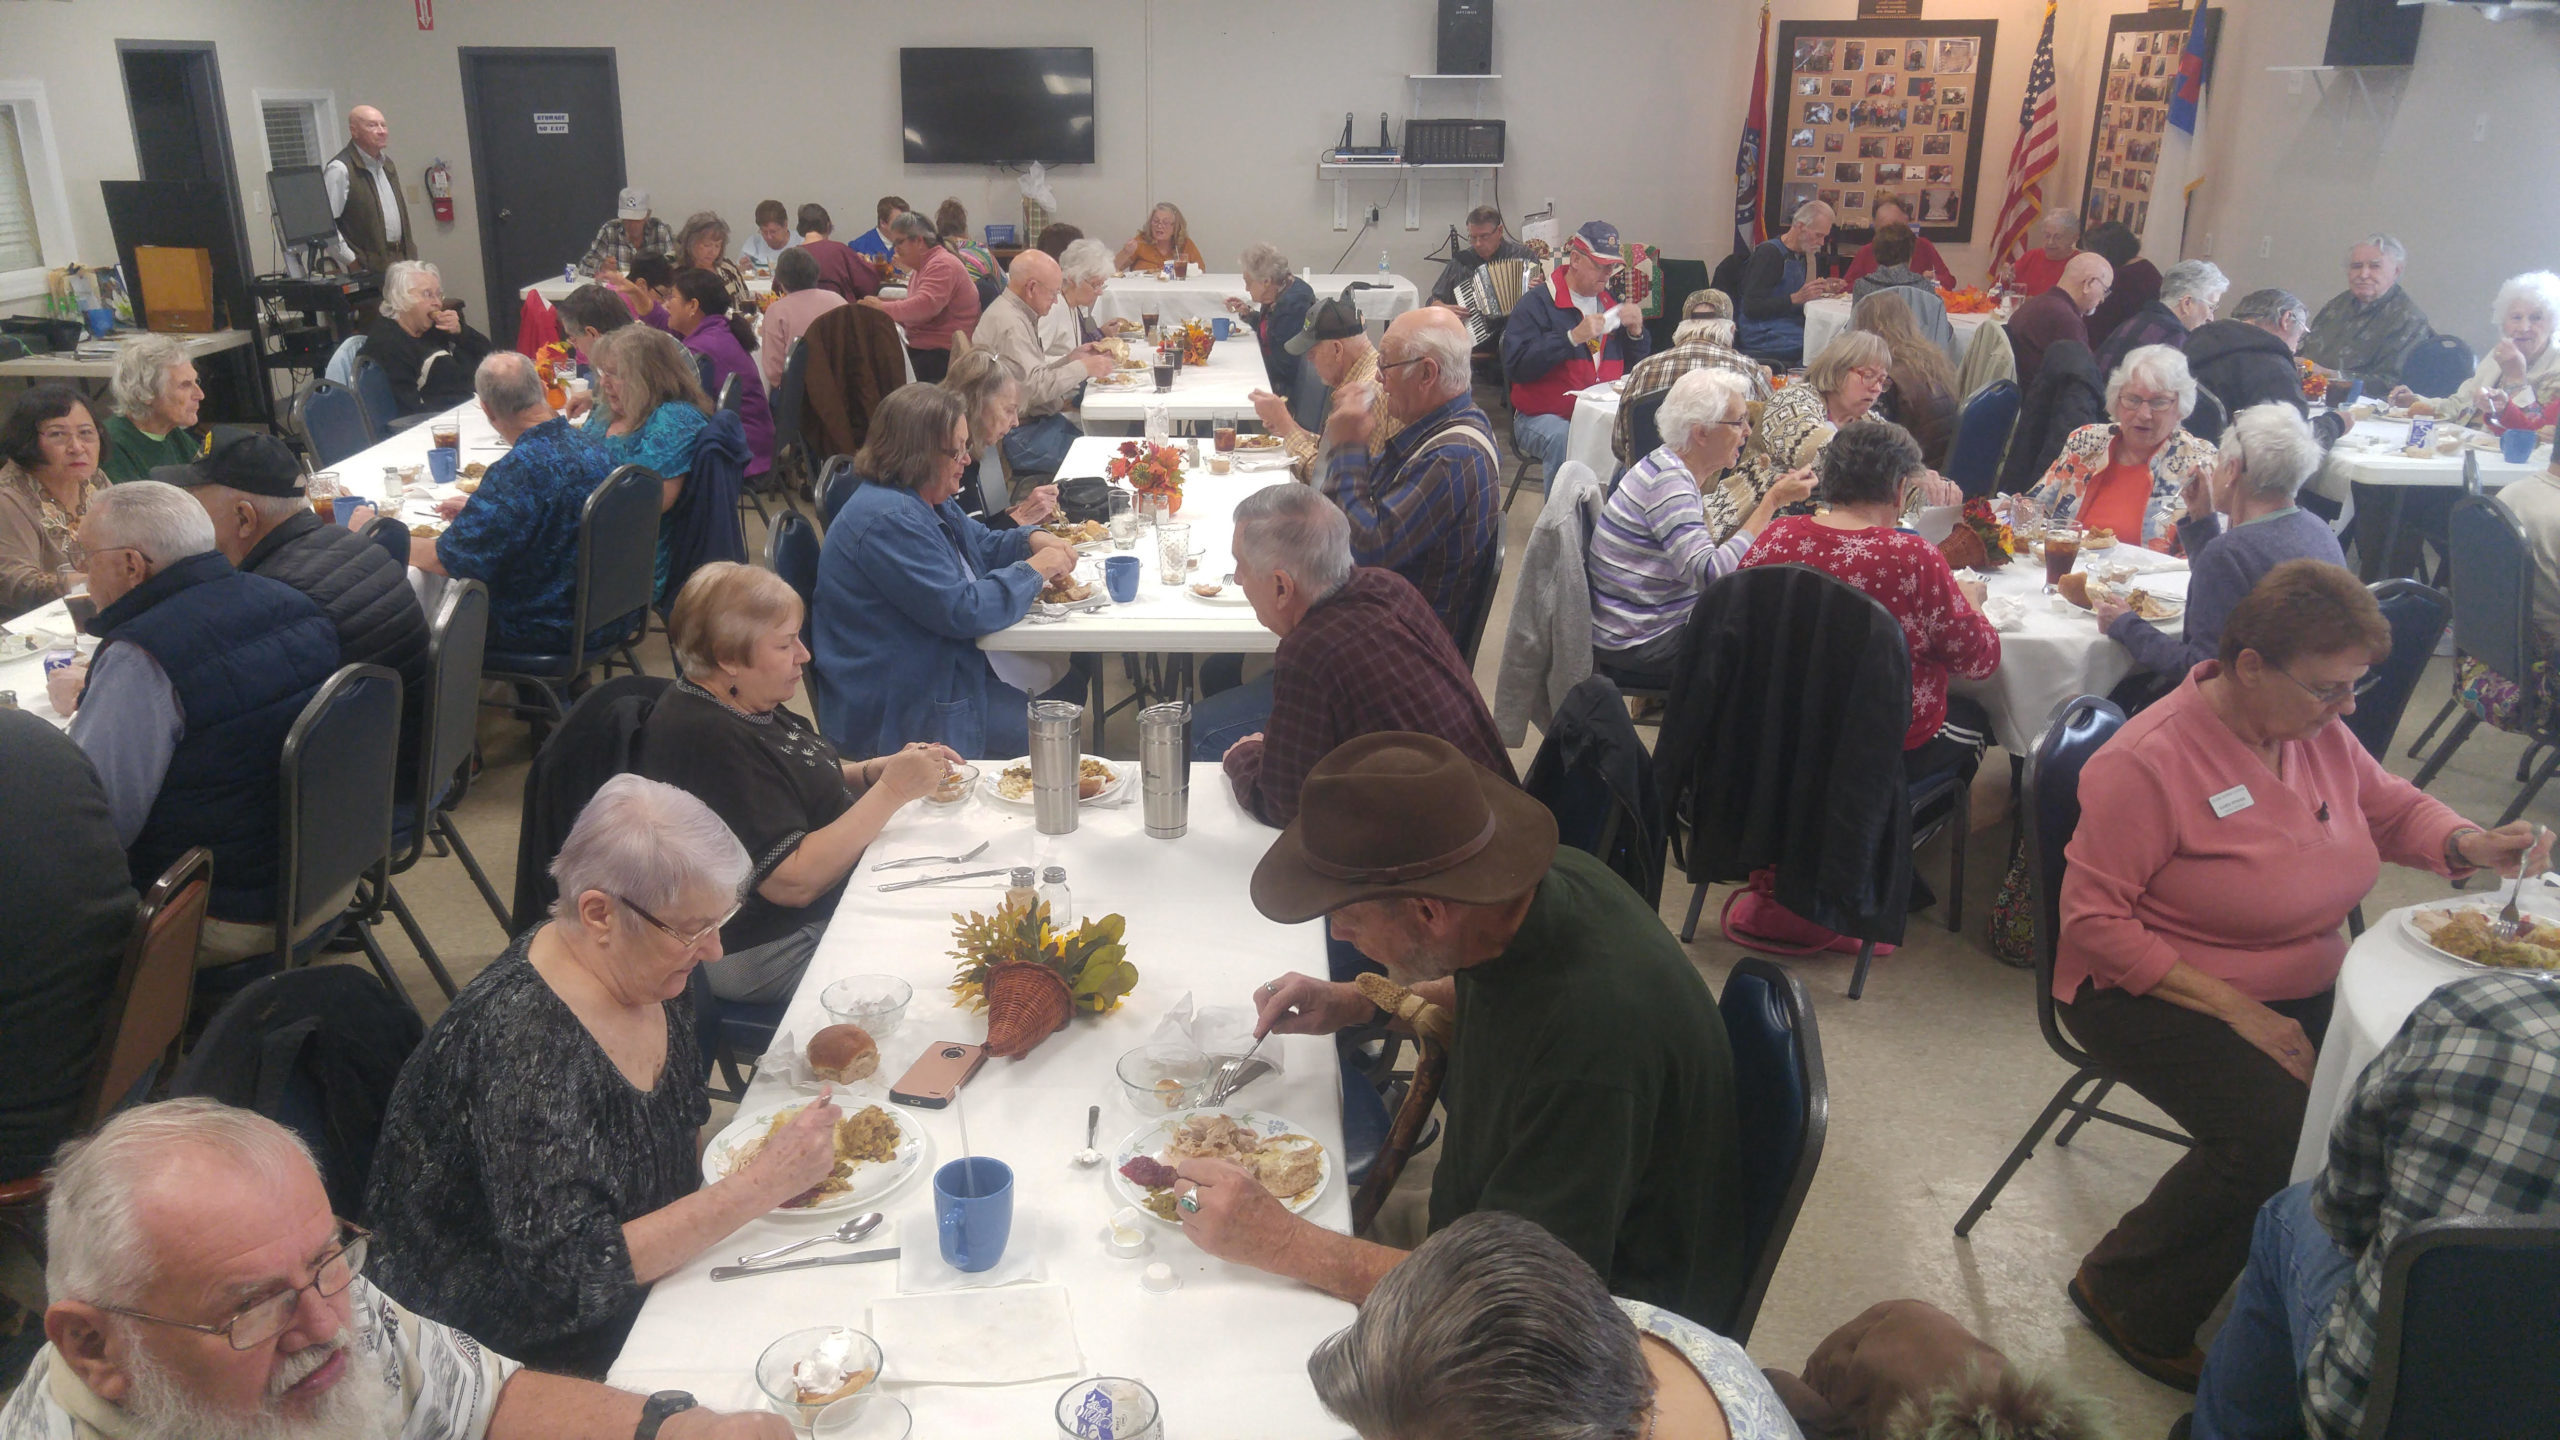 Ozark Senior Center: Food, Friends and Family